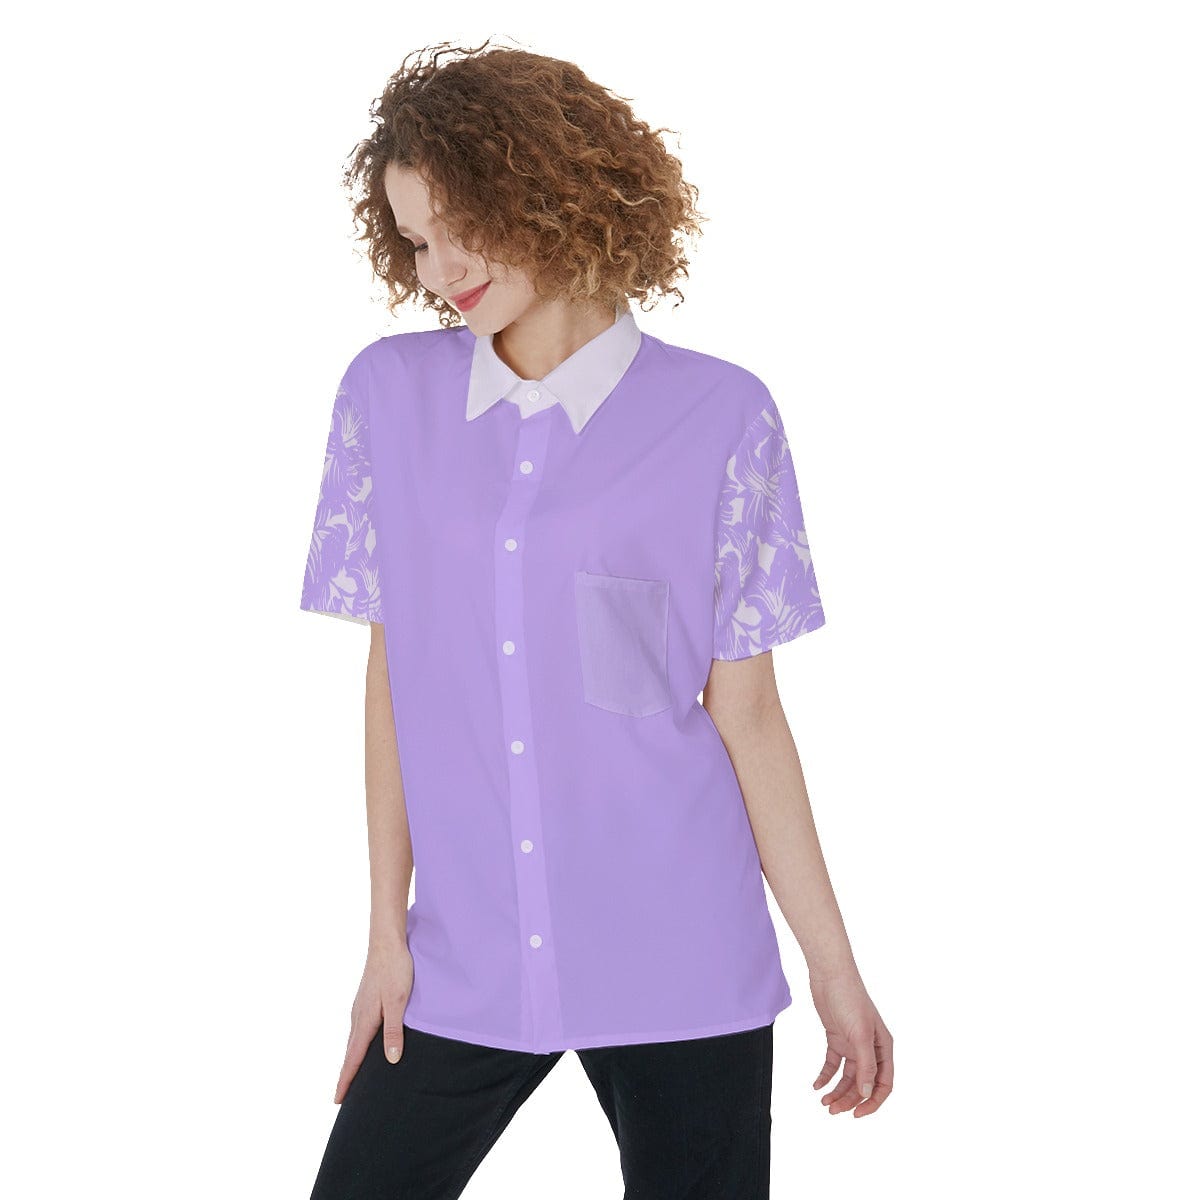 Yoycol Skirt Set 2XL / Lavender Hawaiian Lavender - Women's Short Sleeve Shirt With Pocket